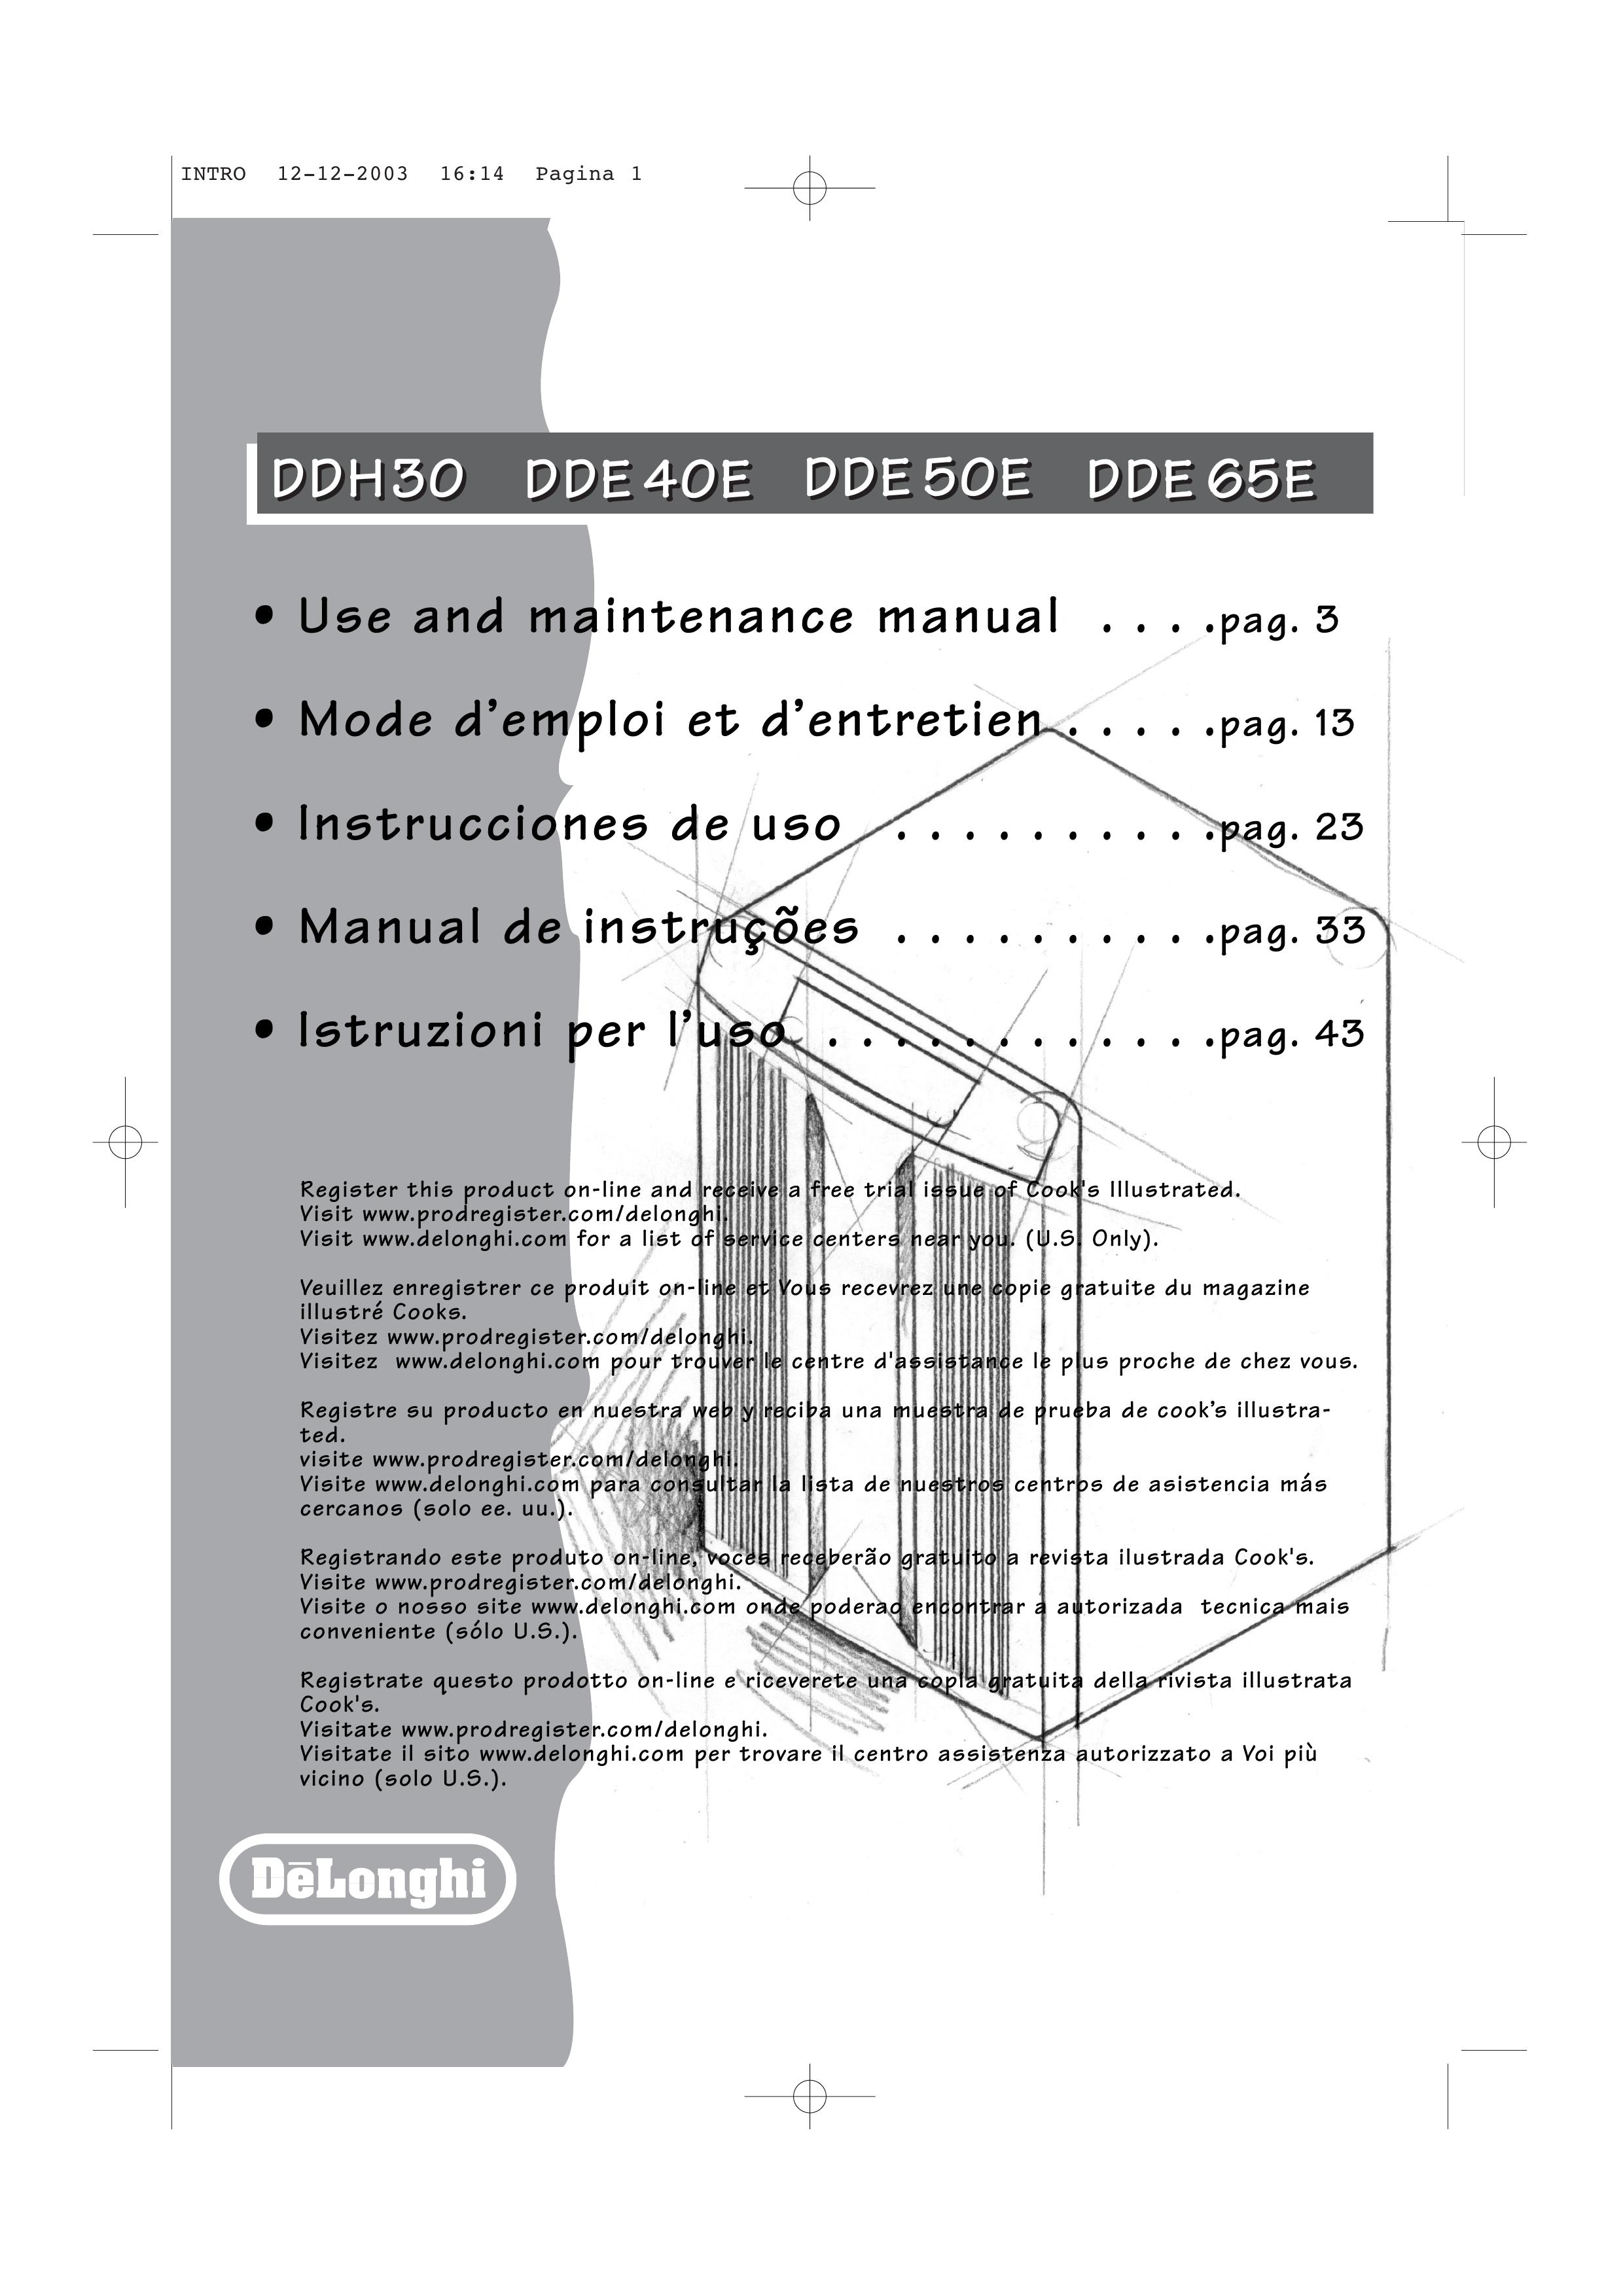 DeLonghi DDE 65E Washer User Manual